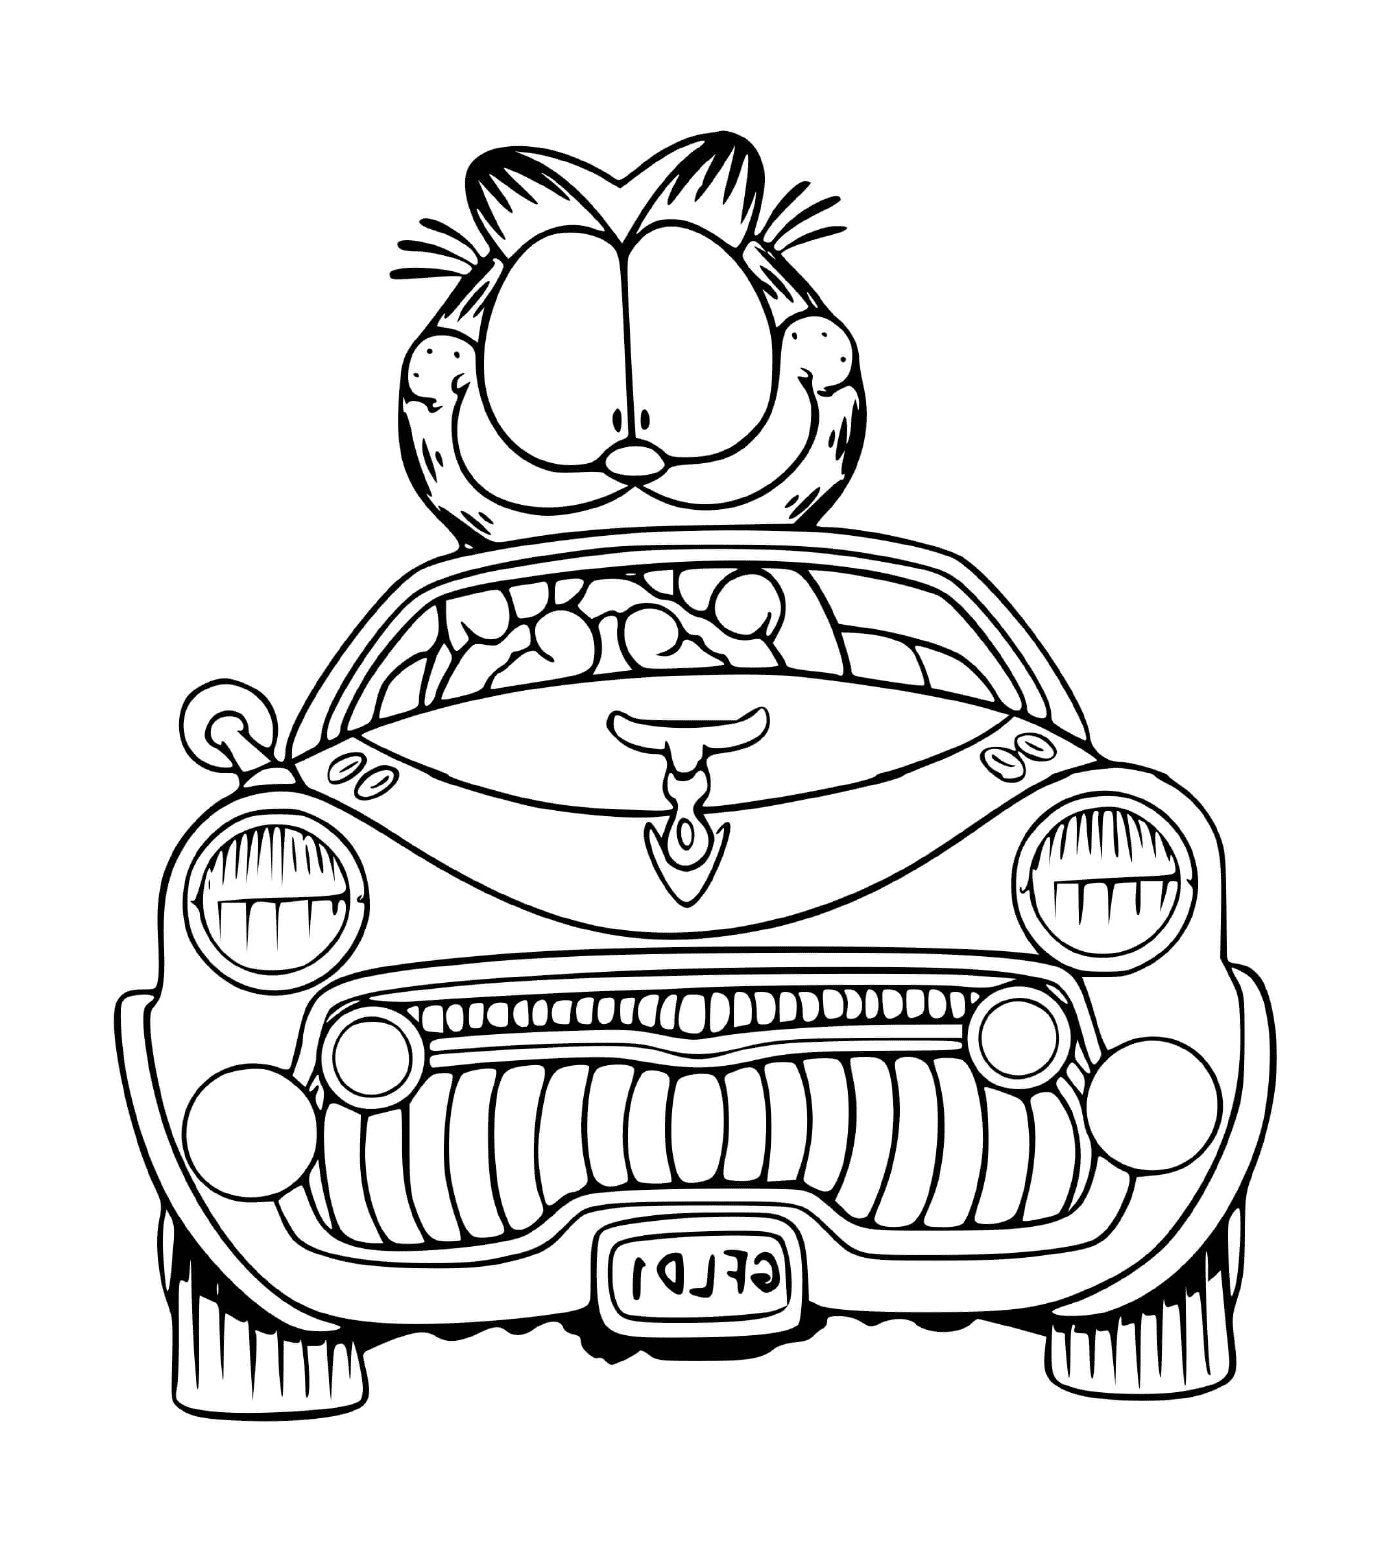  Garfield se beneficia de um carro de luxo 